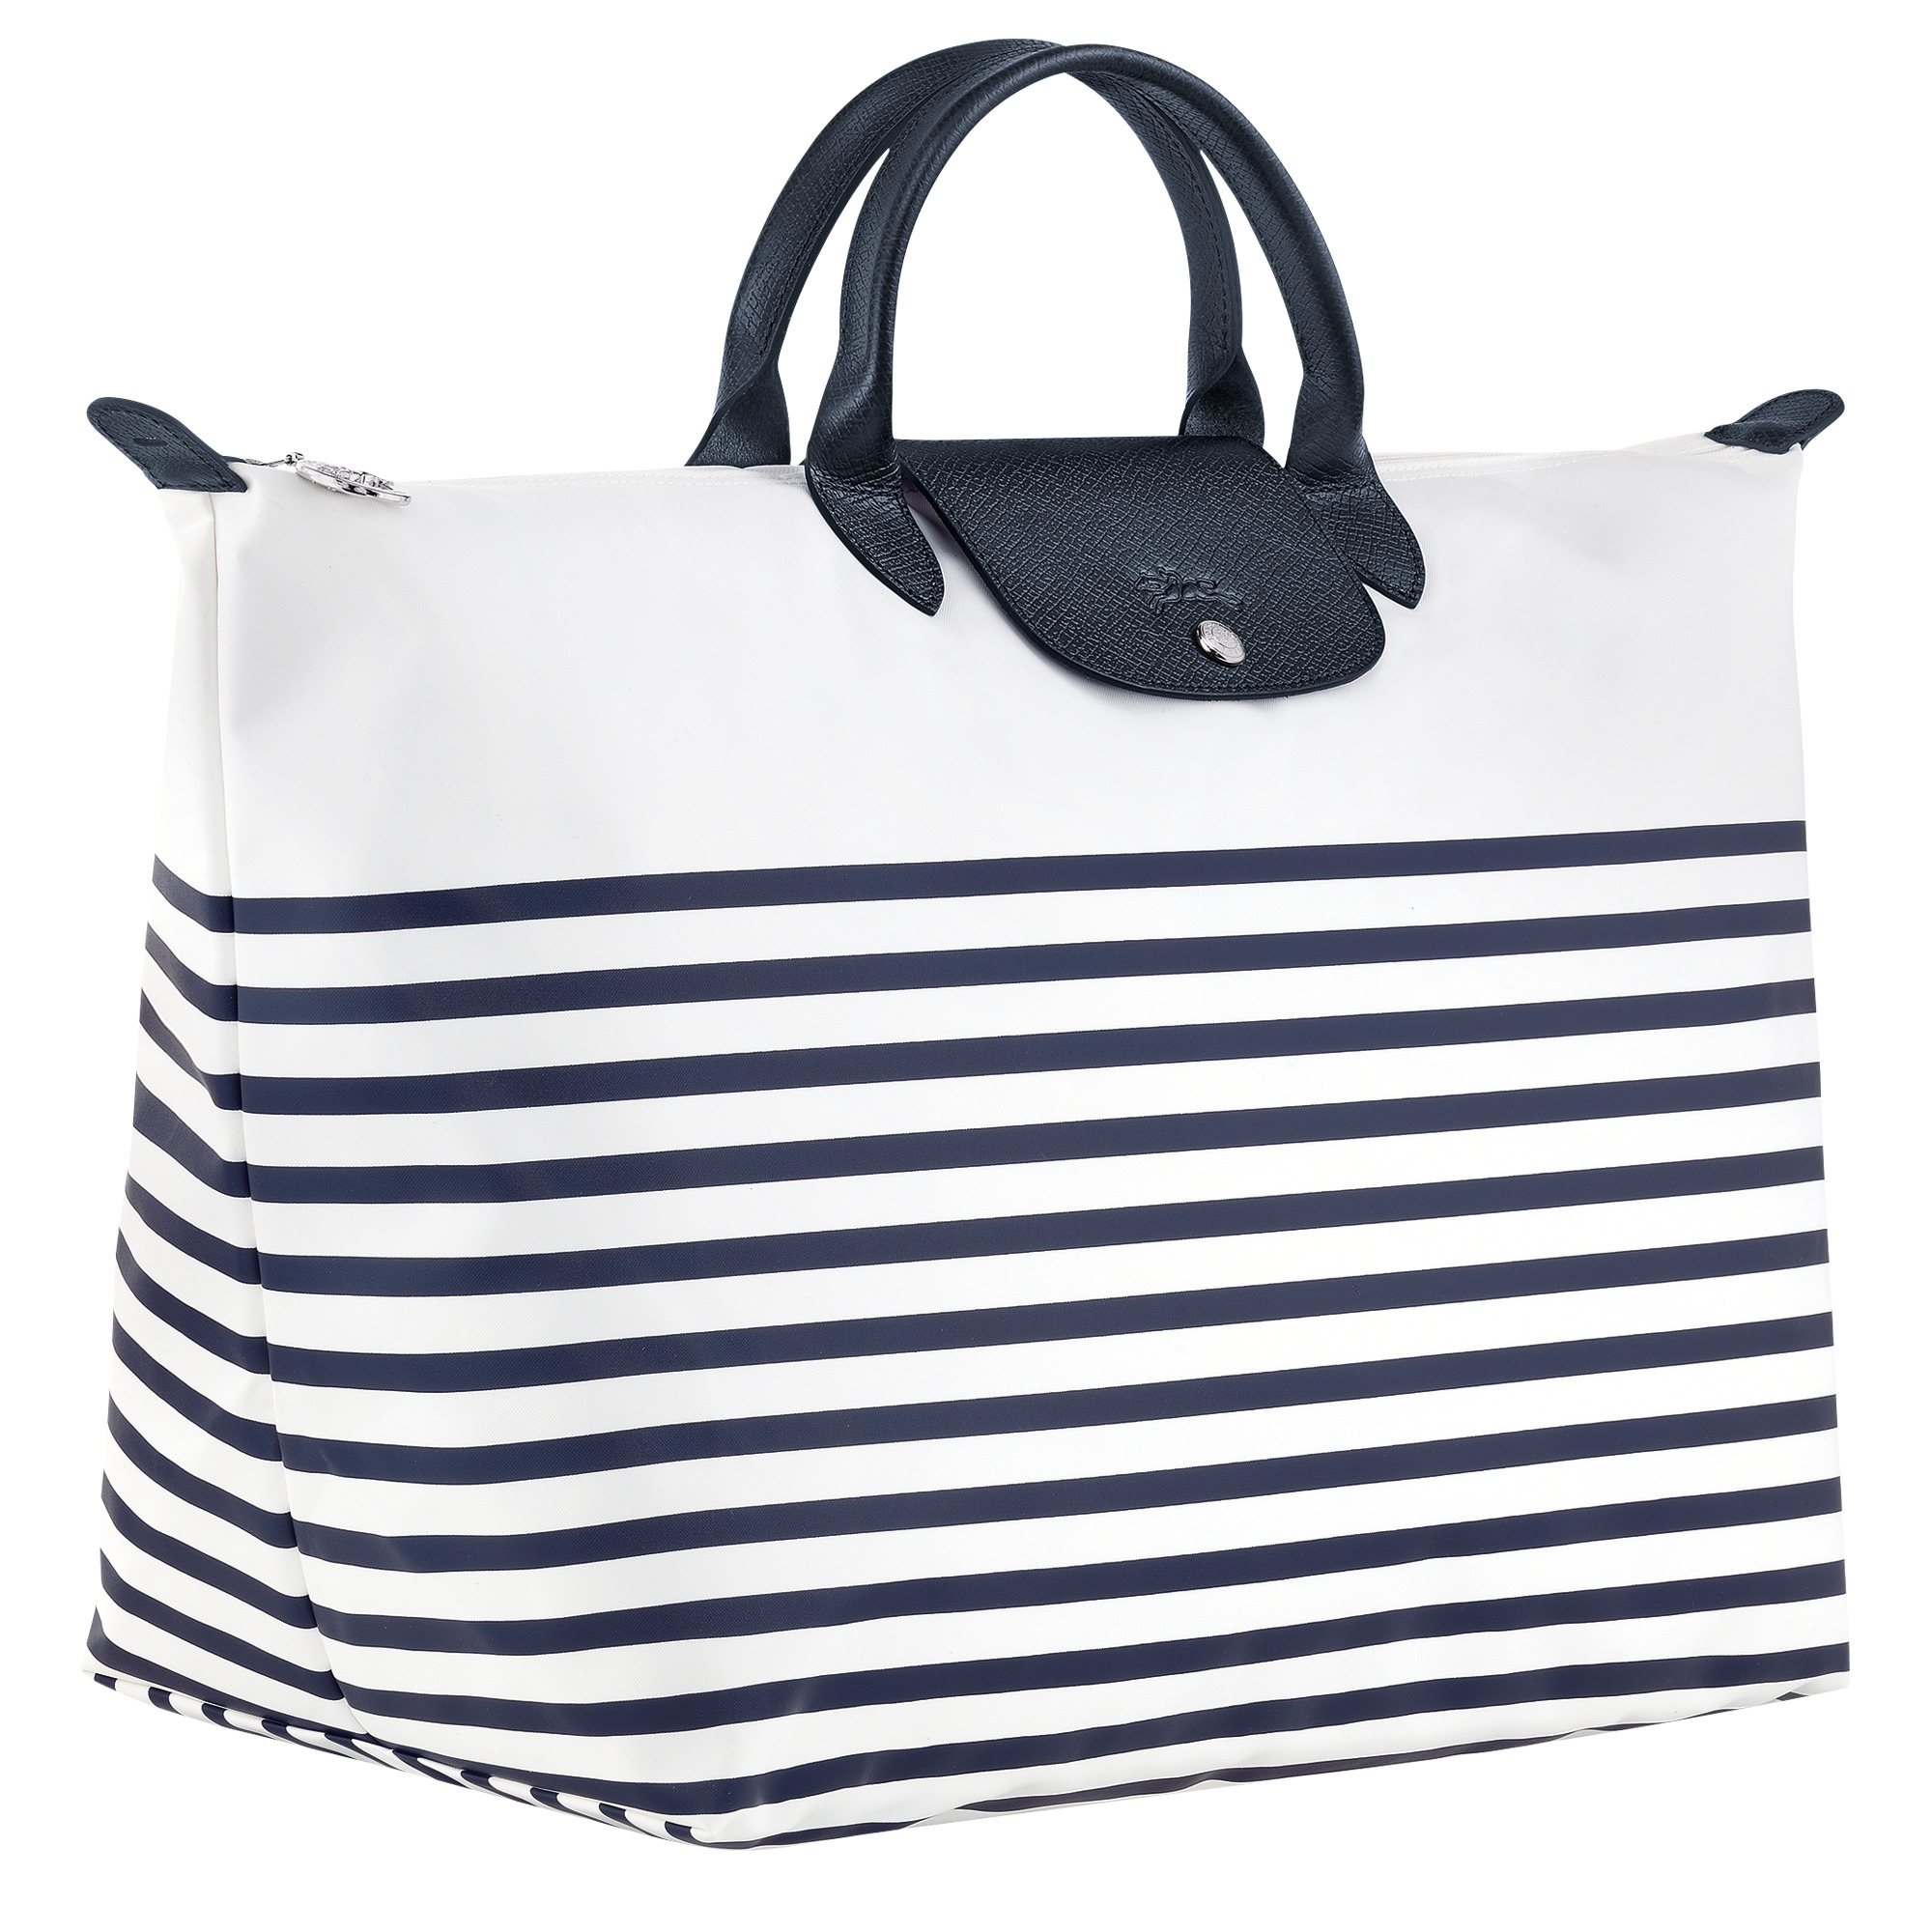 Longchamp Le Pliage Collection S Travel bag Navy/White - Canvas